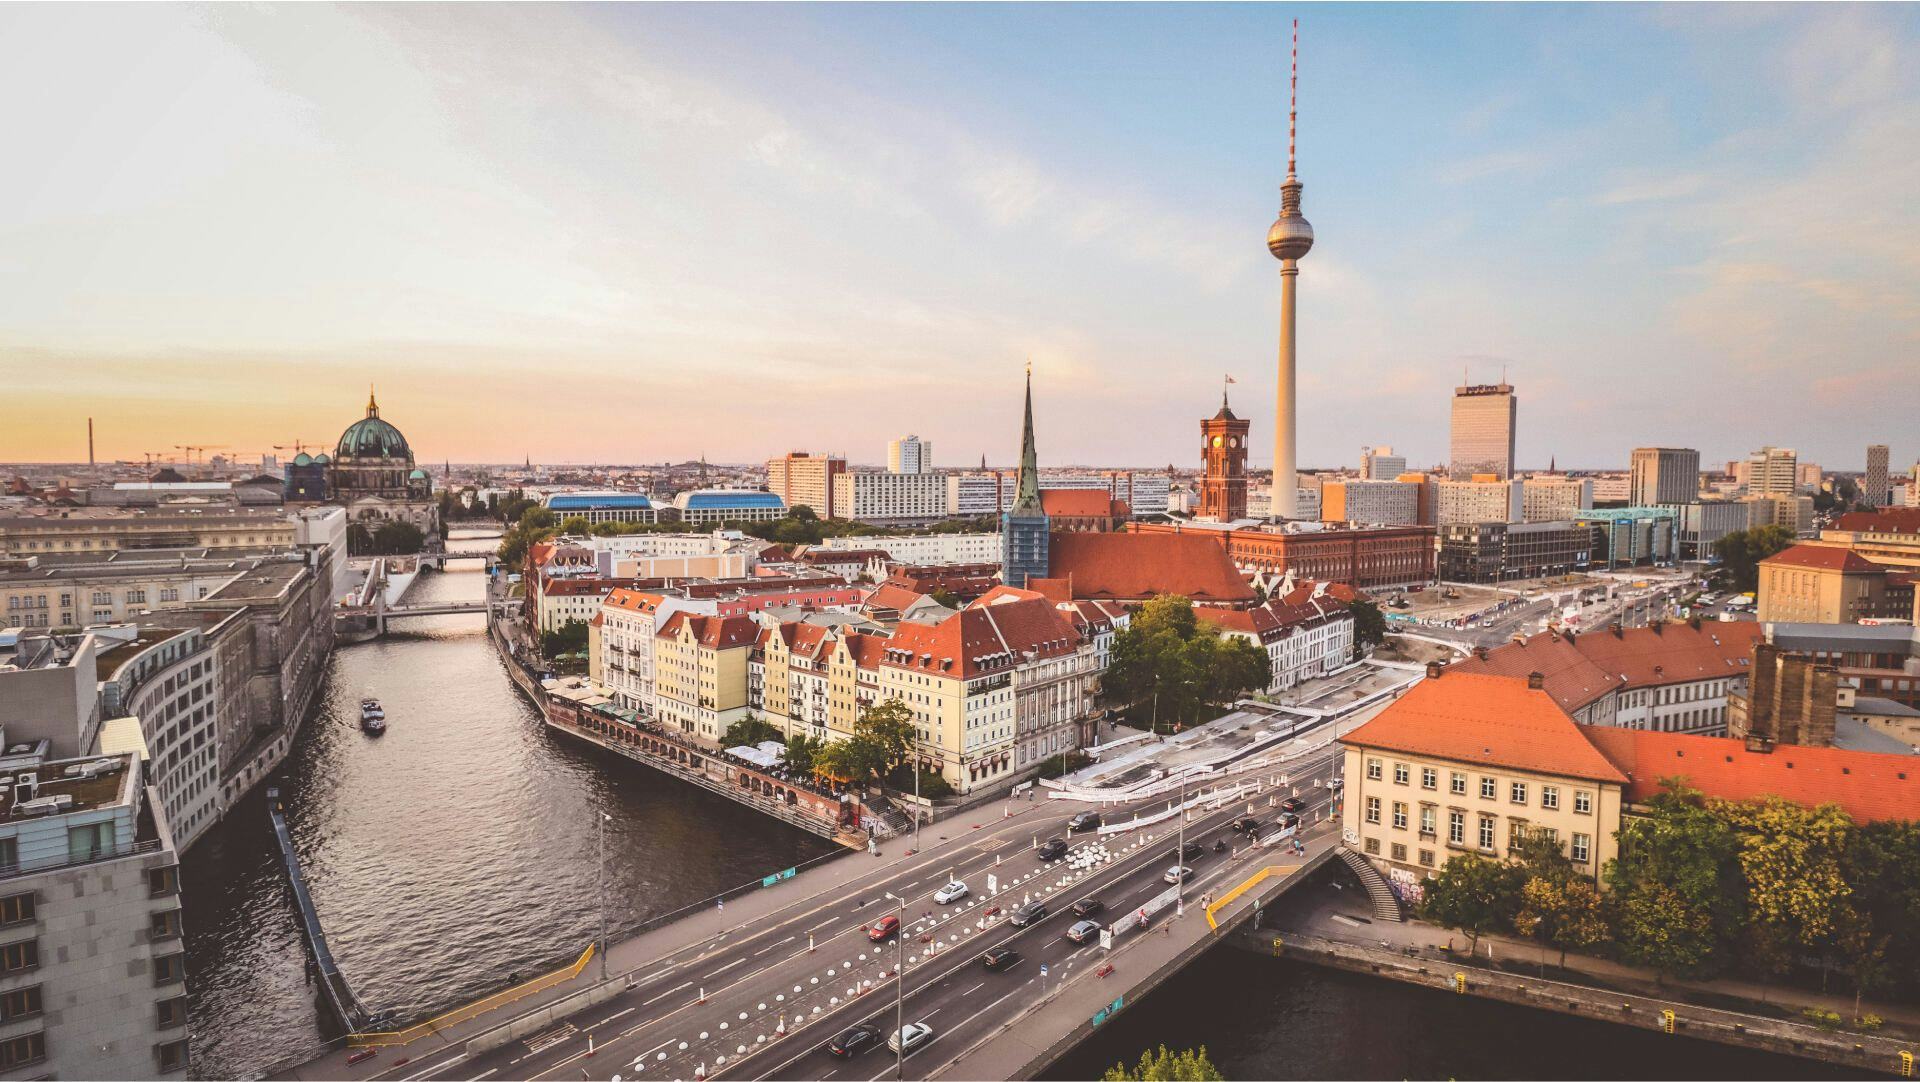 An overview of Berlin